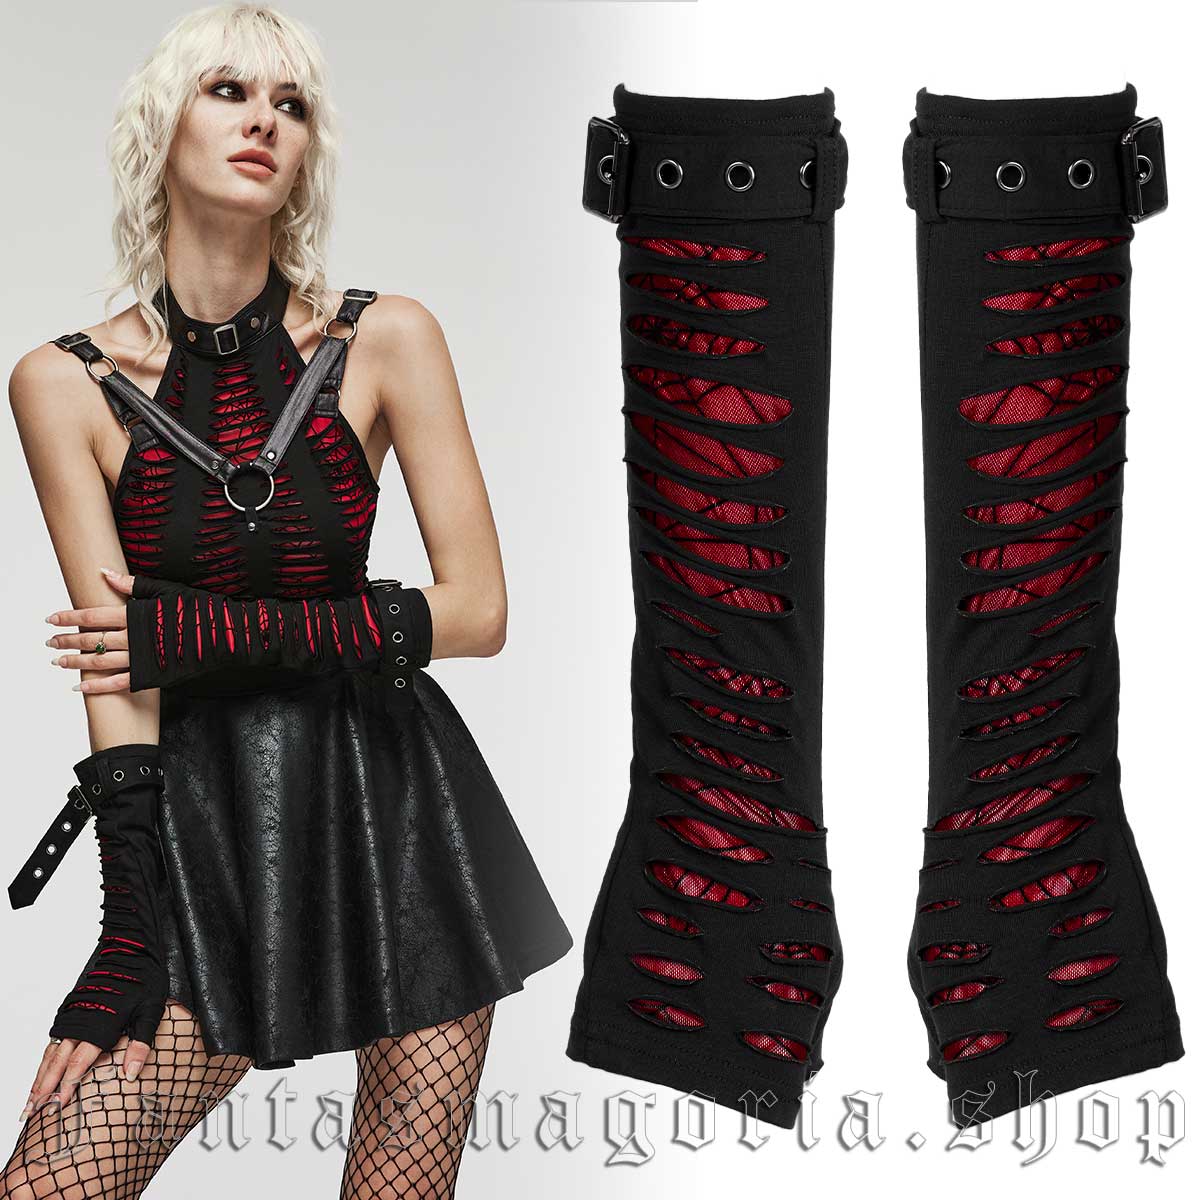 Punk shredded black and red spiderweb mesh gloves. - Punk Rave - WS-490/BK-RD